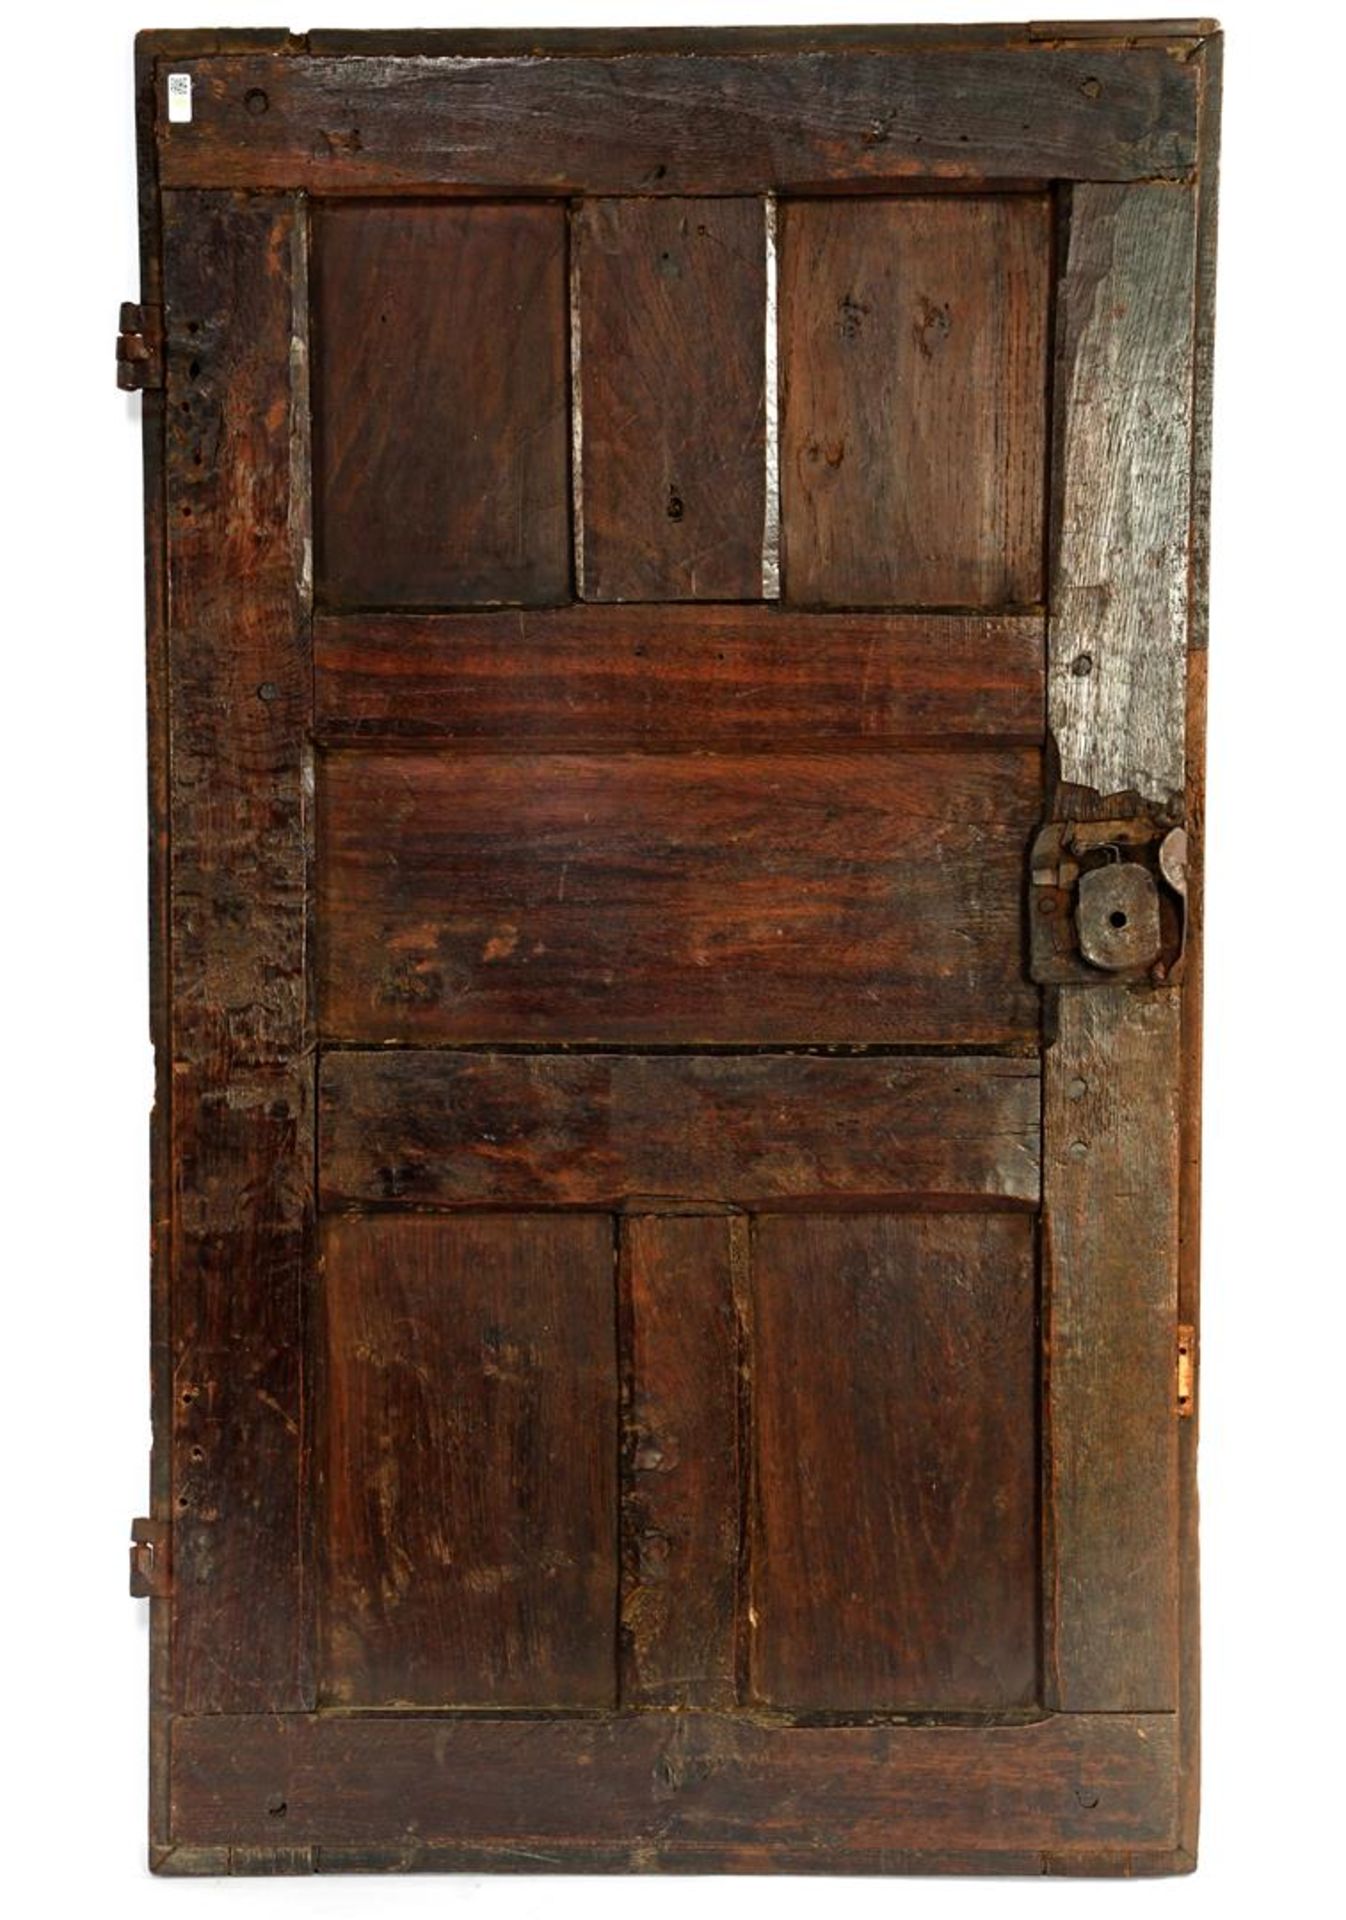 2 antique doors of a cupboard - Image 3 of 6